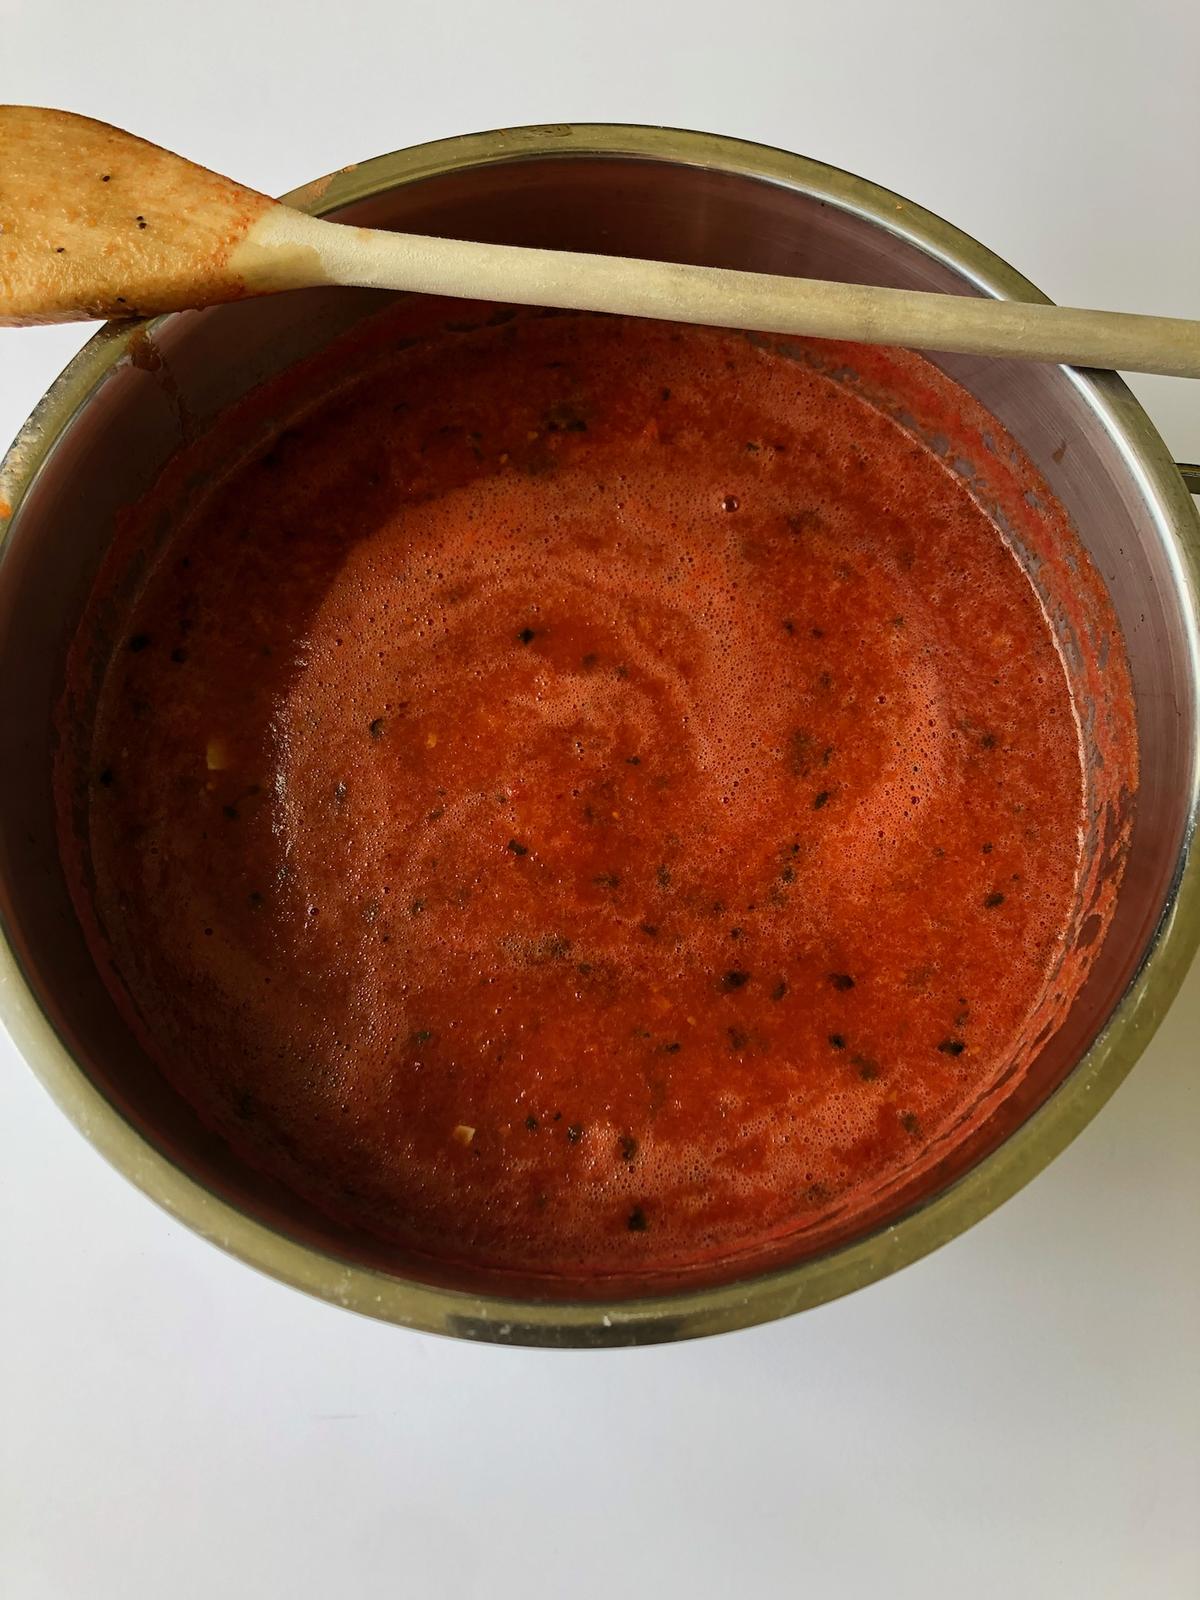 Basic marinara sauce. (Courtesy of James Casale)